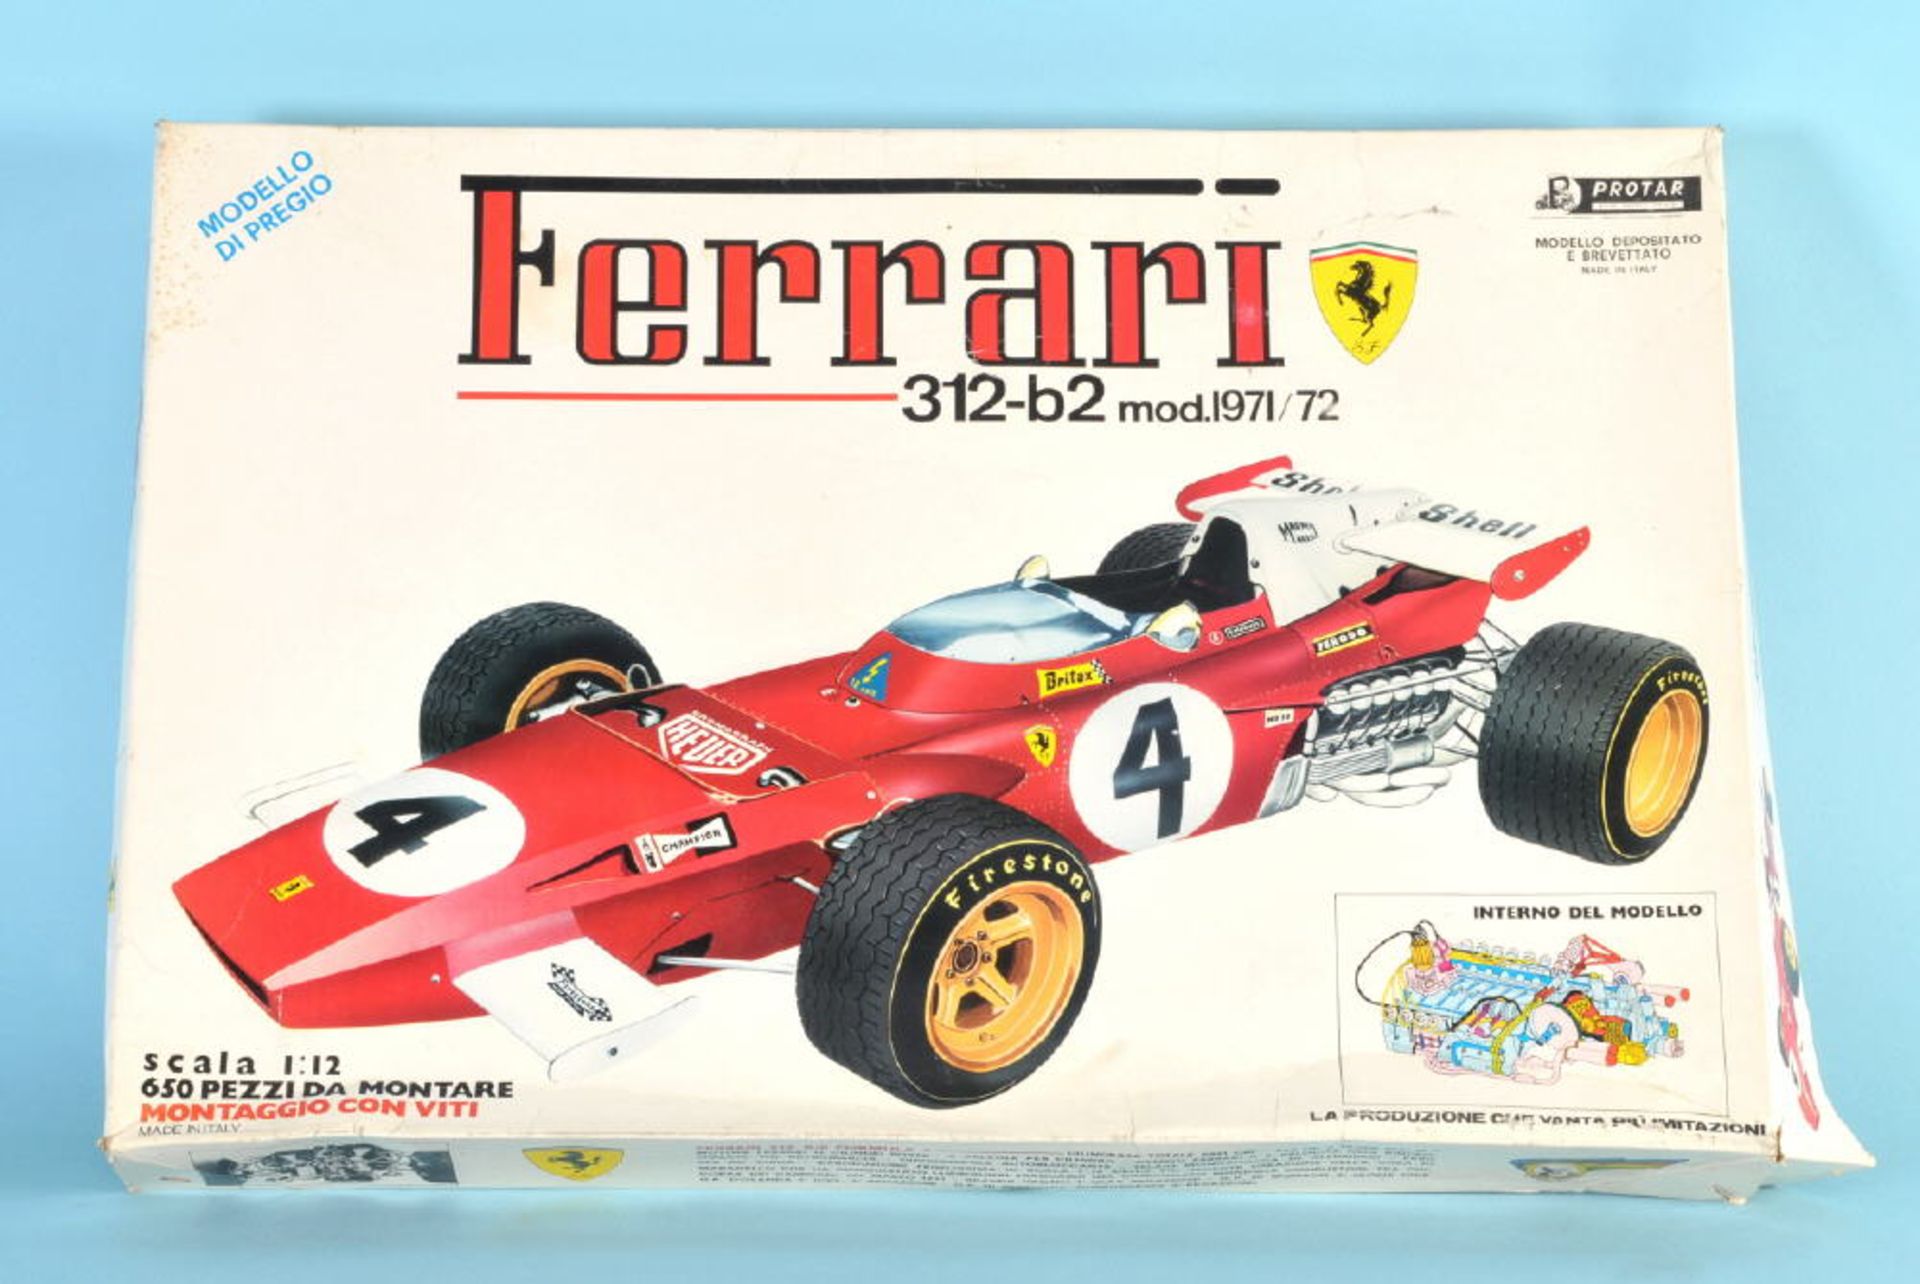 Modellbausatz "Protar" - Ferrari 312-b2Maßstab 1:12, Kunststoff, OVP